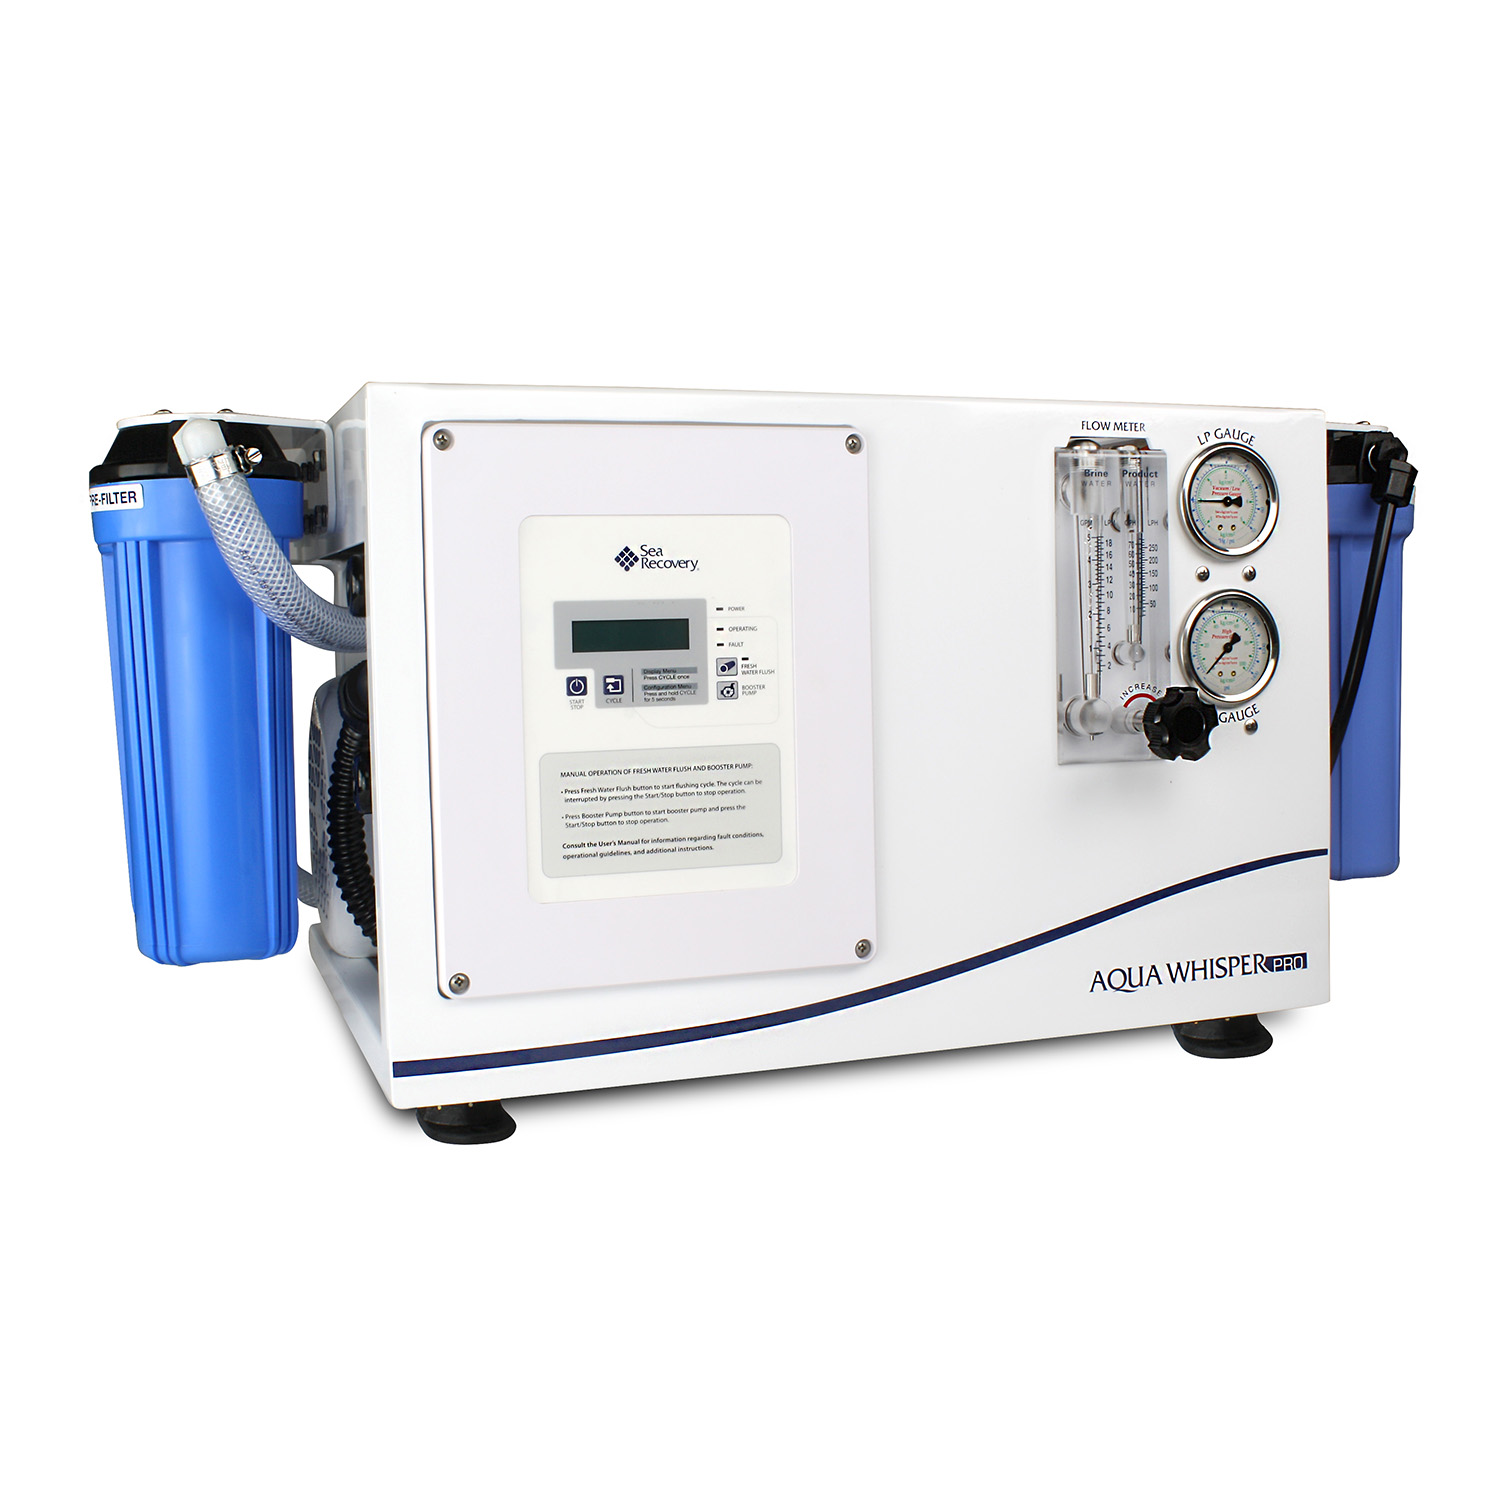 Aqua Whisper Pro 1400-2 Compact watermaker